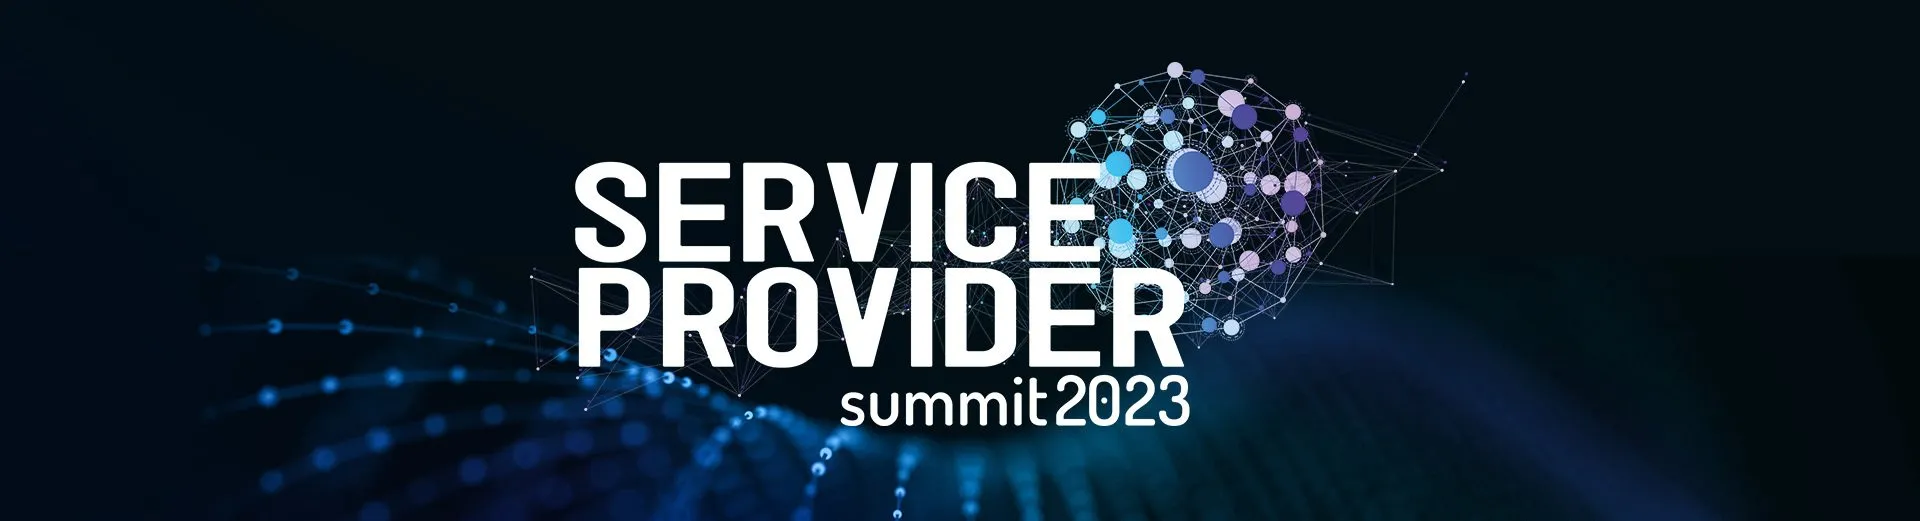 Service Provider Summit 2023